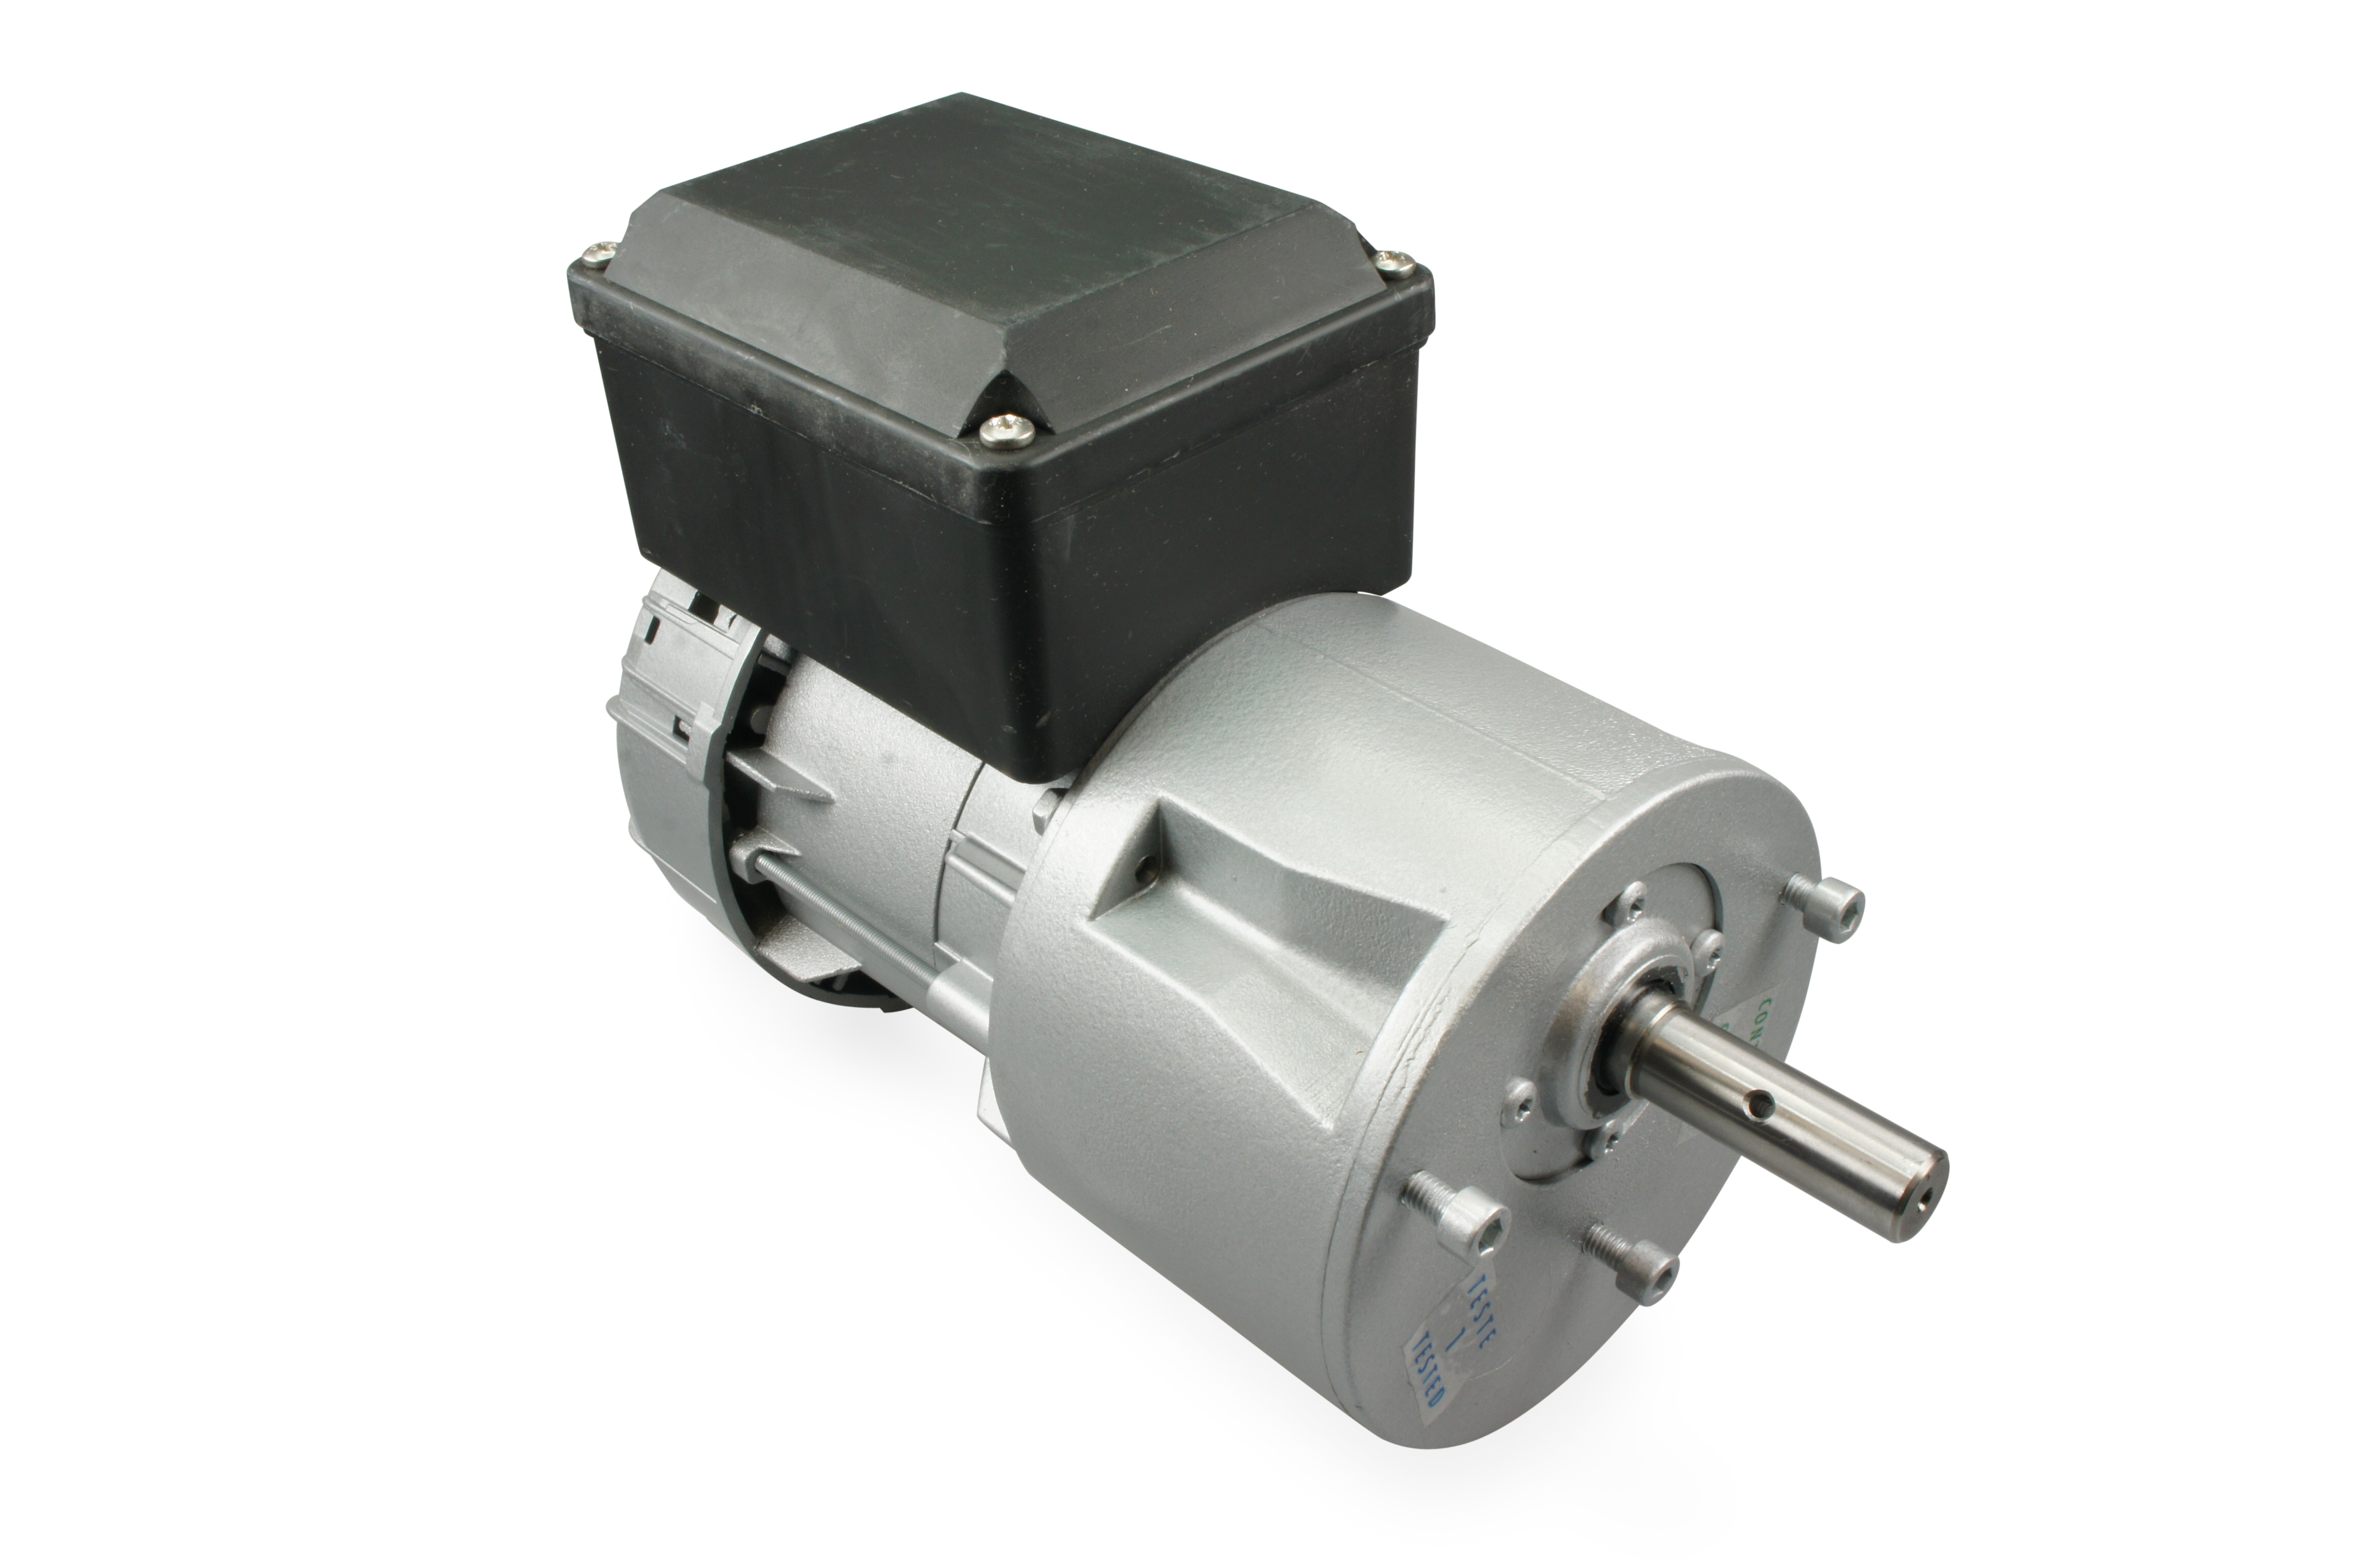 SIREM agitator motor R1C245M2B, 32 rpm - Reci Prof Oisterwijk